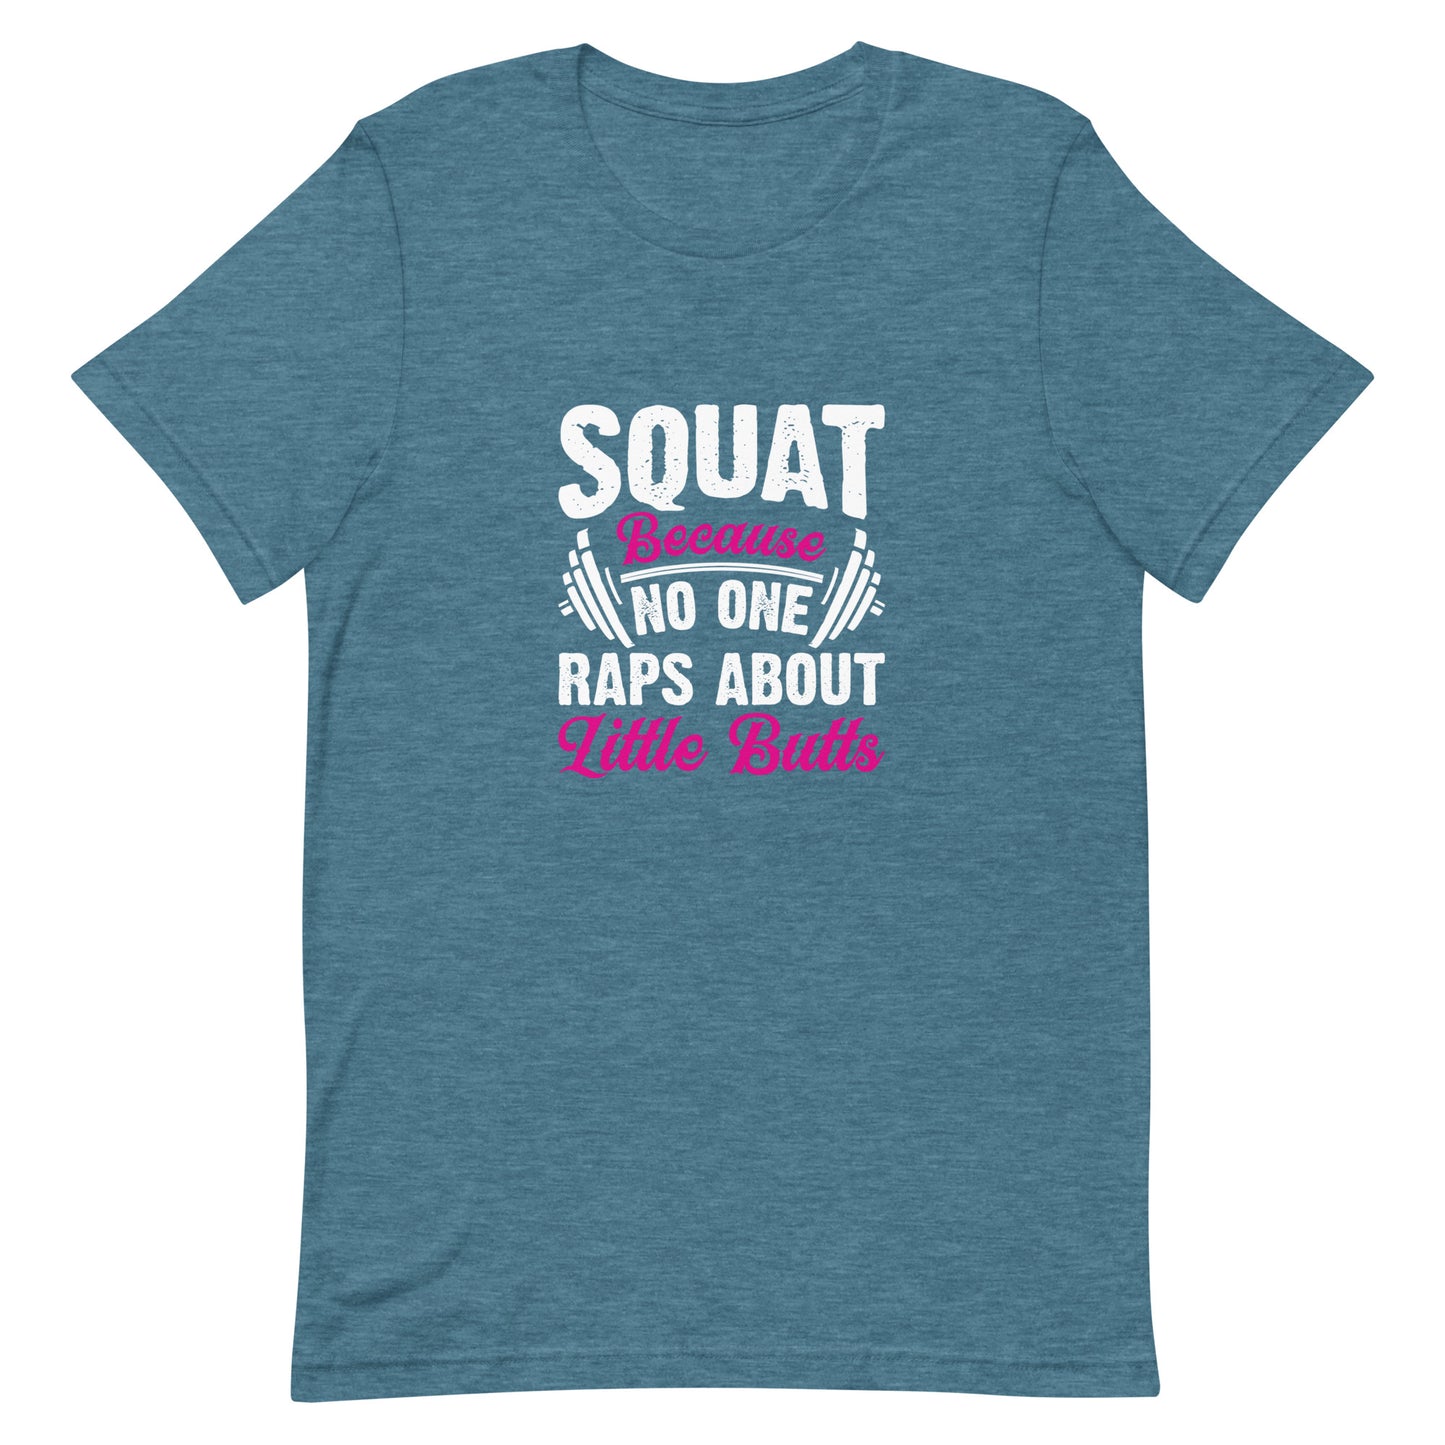 Squat Because No One Raps About Little Butts Unisex t-shirt